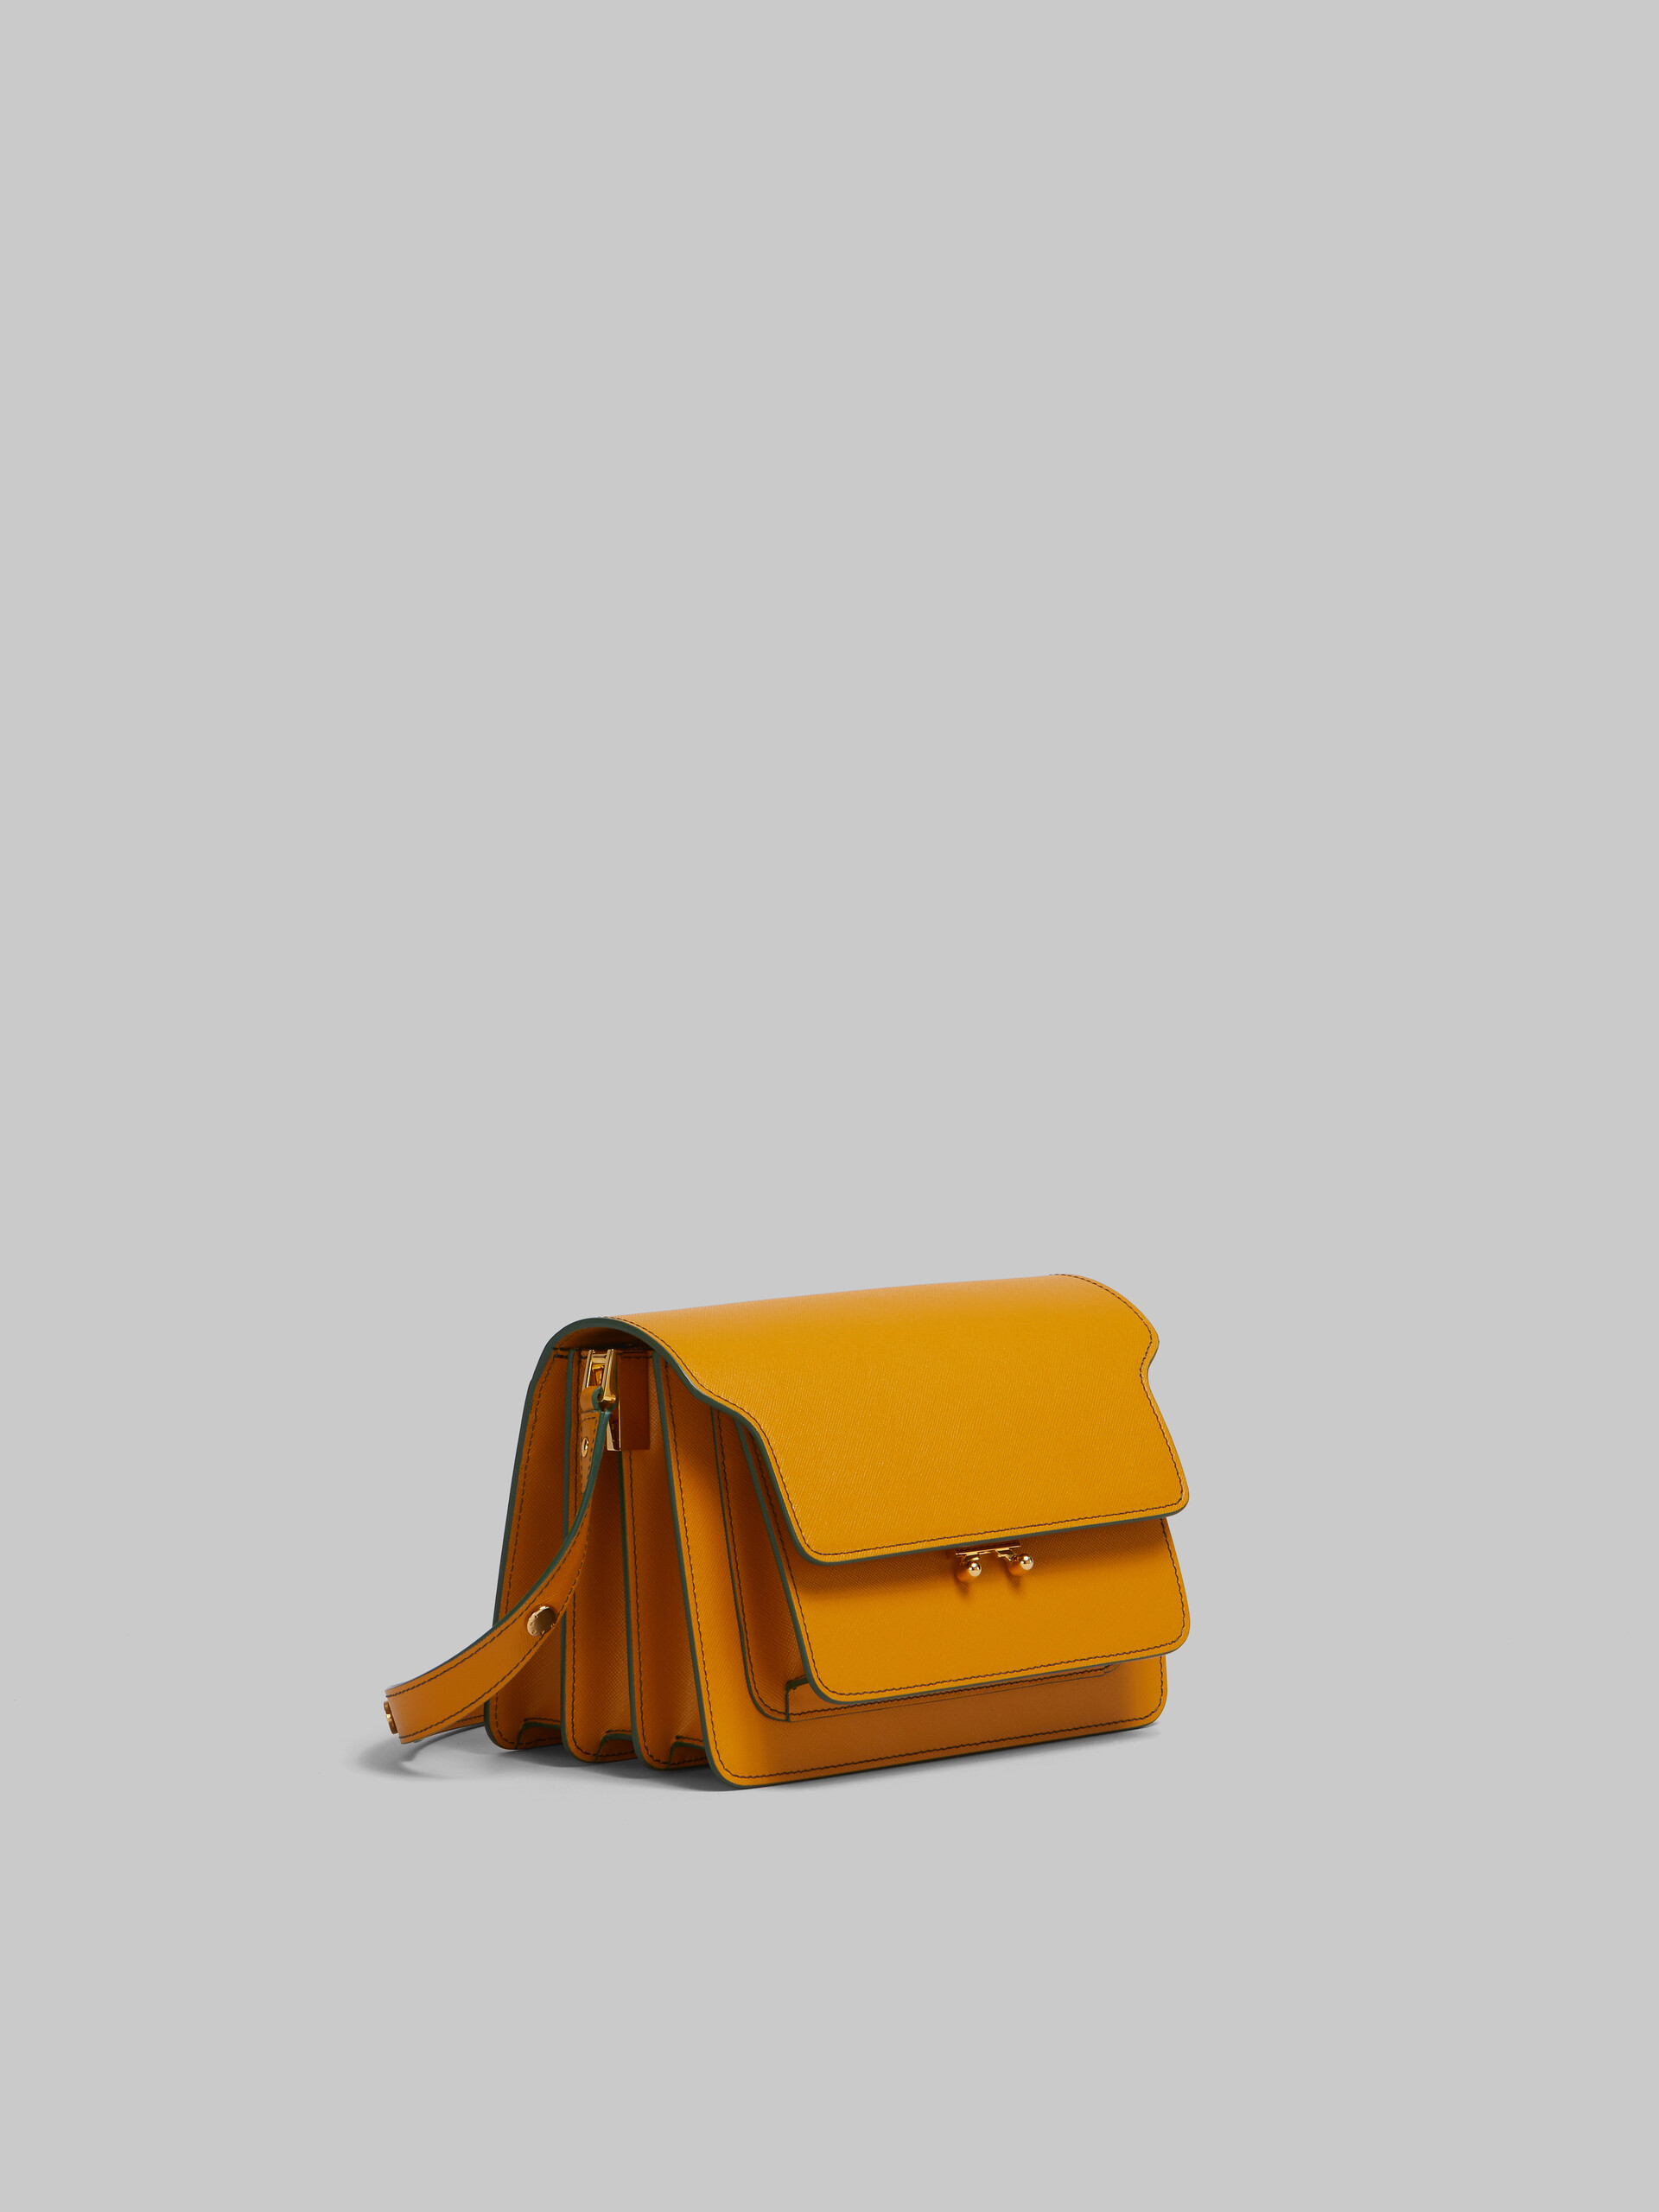 Beige saffiano leather medium Trunk bag - Shoulder Bags - Image 6